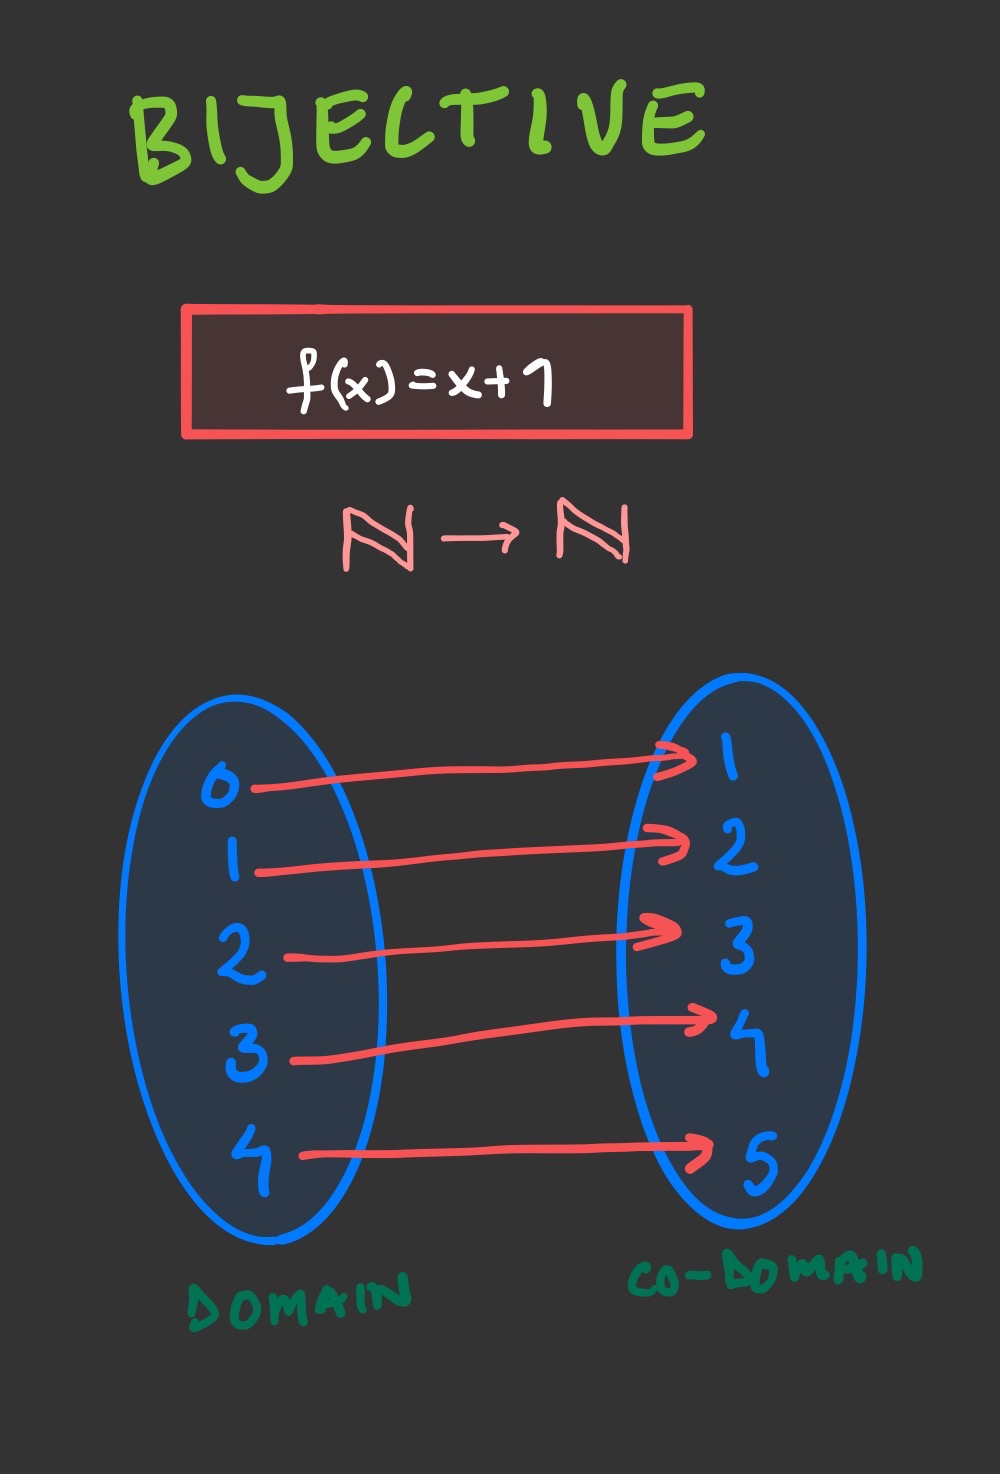 Example of bijective function diagram